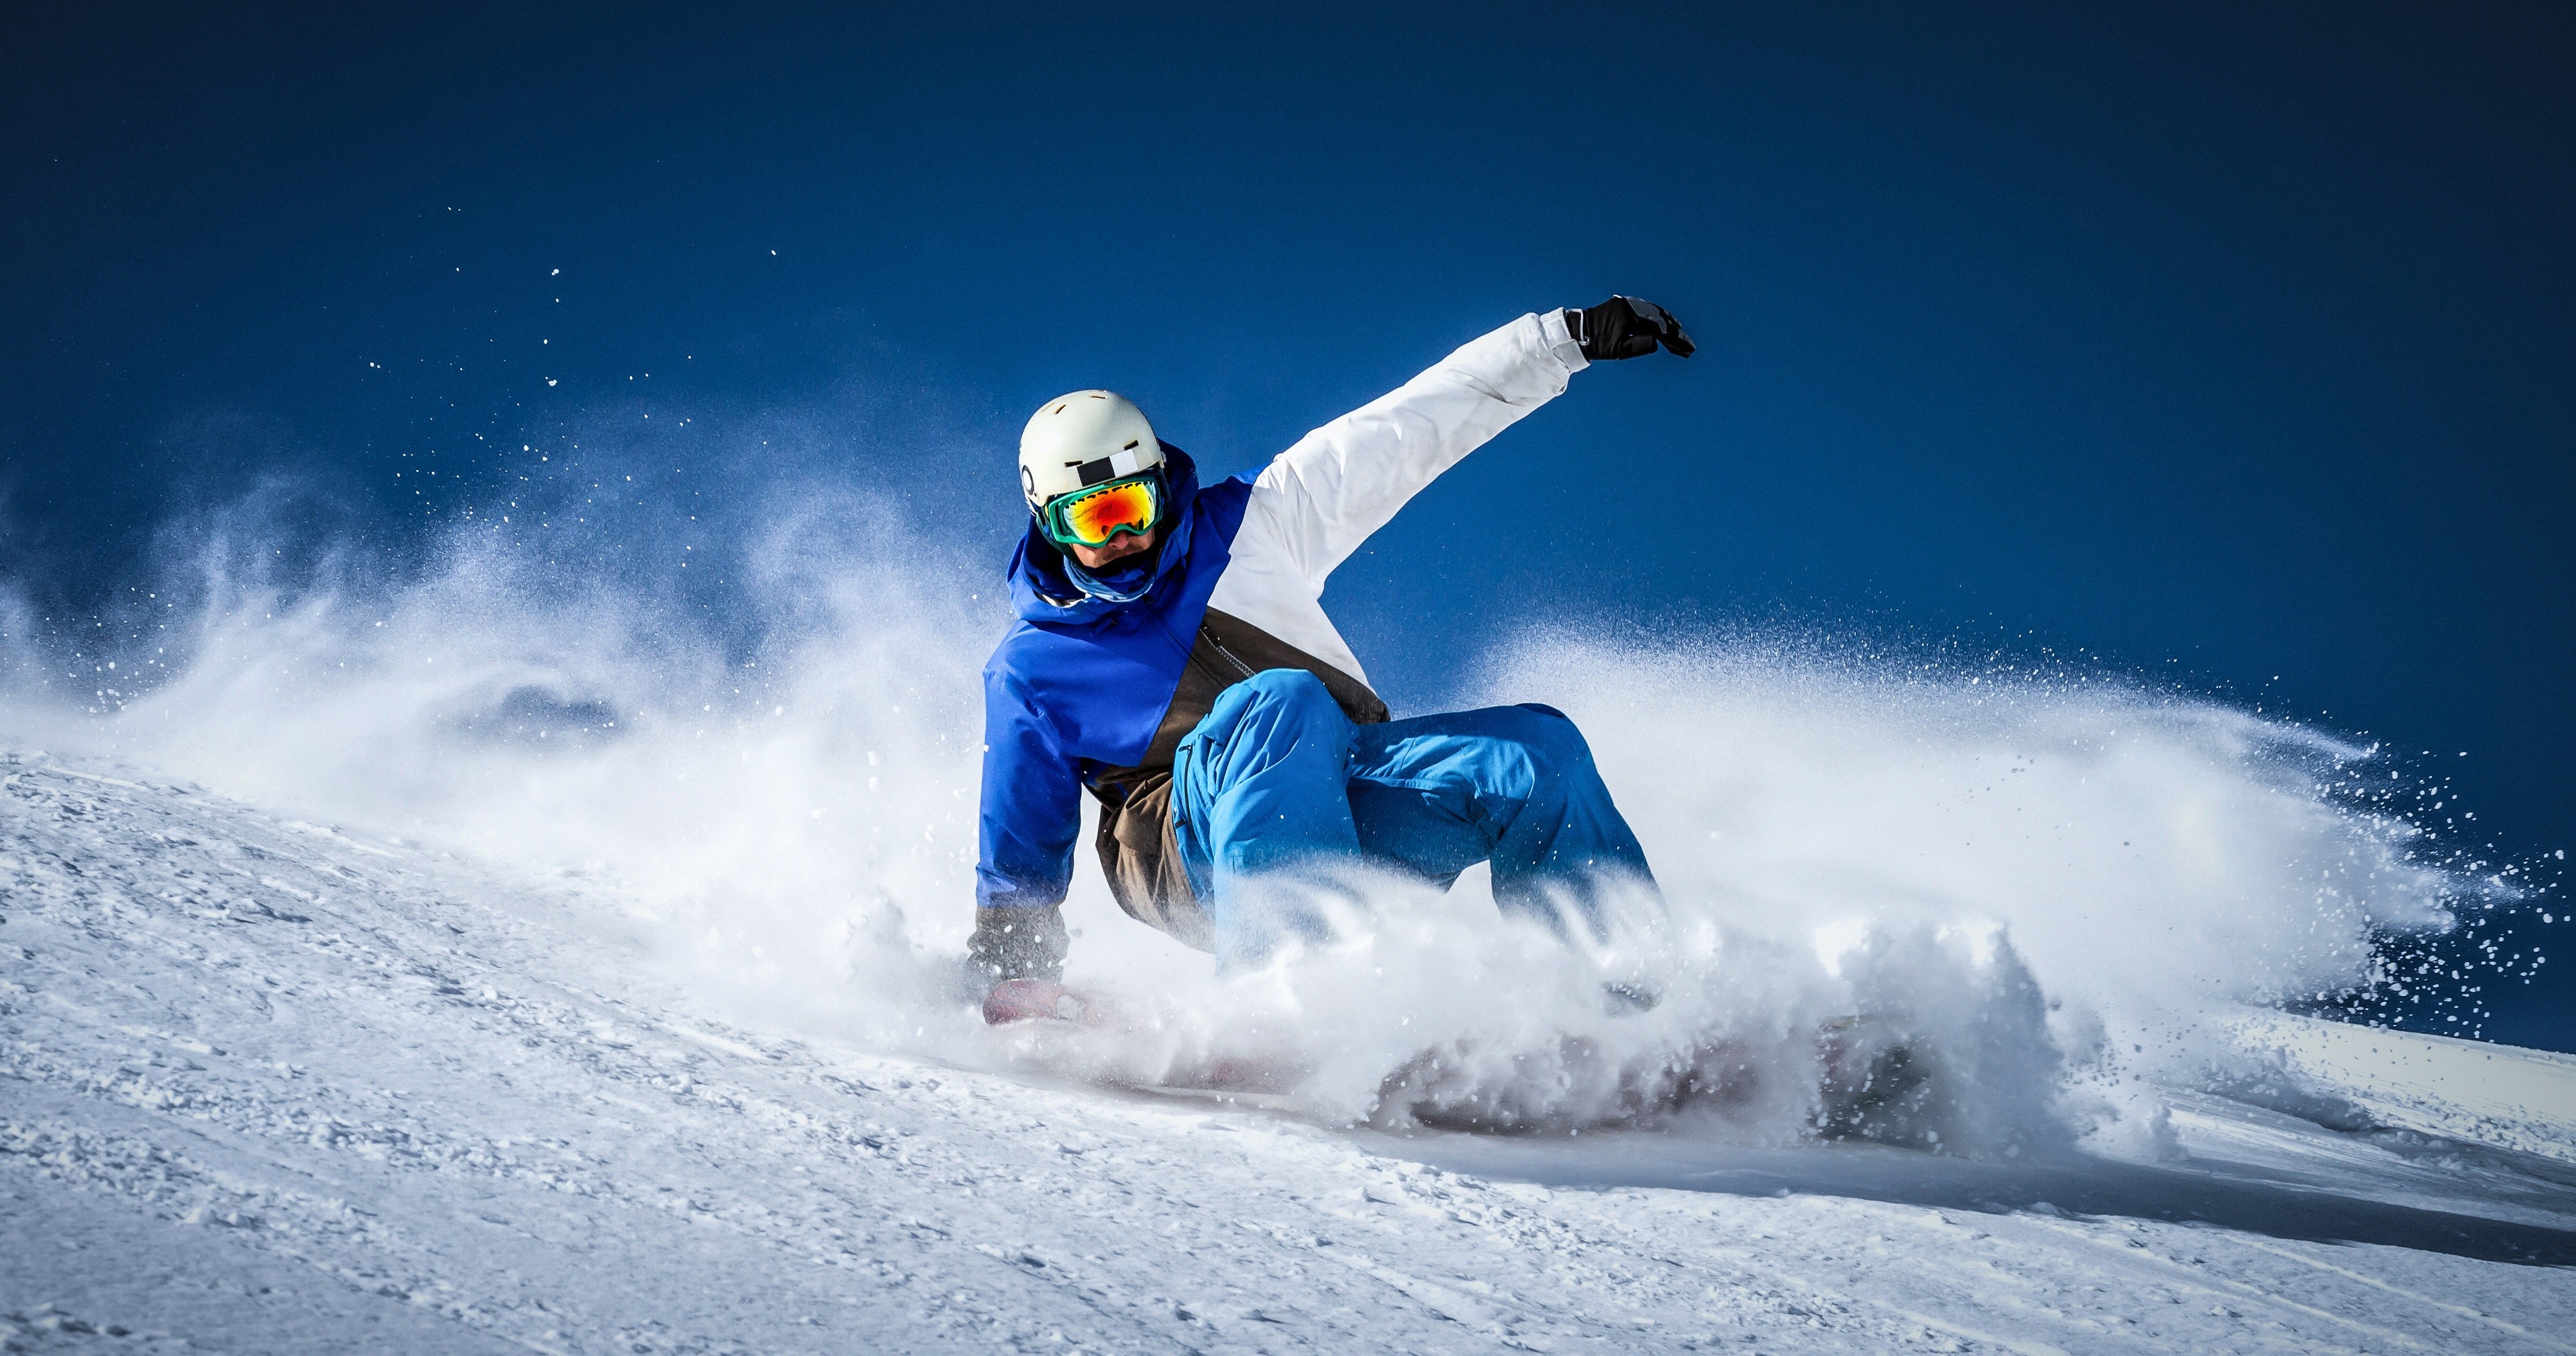 74 Snowboarding Desktop Backgrounds  WallpaperSafari